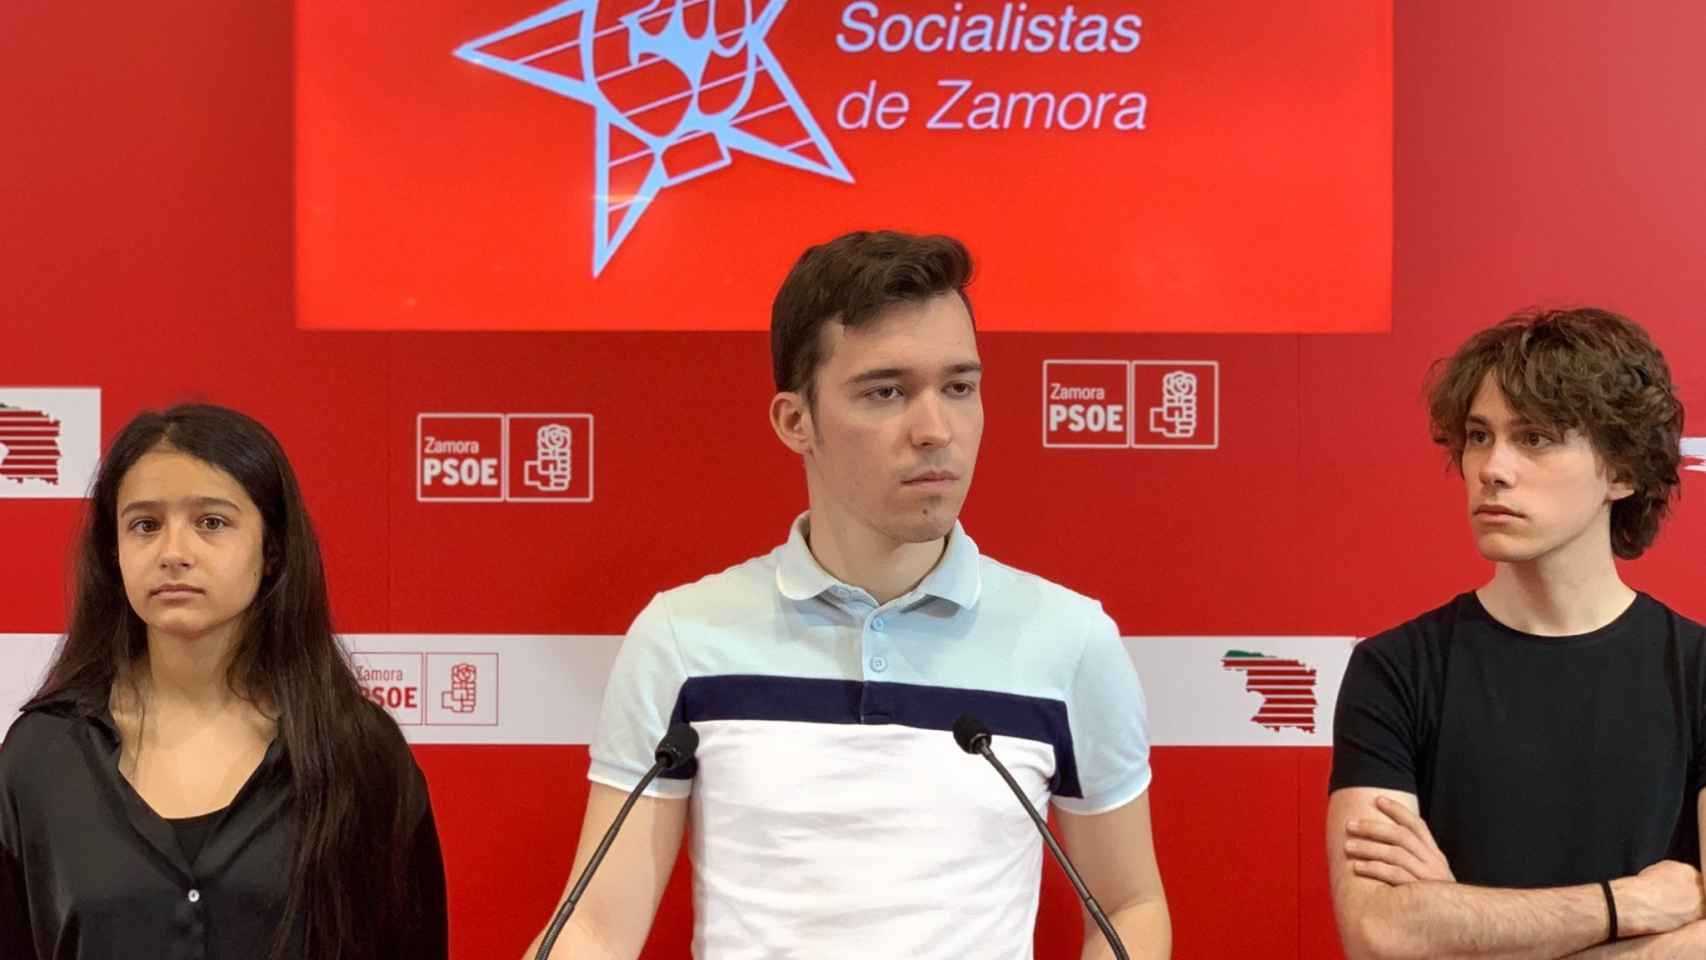 Juventudes Socialistas de Zamora